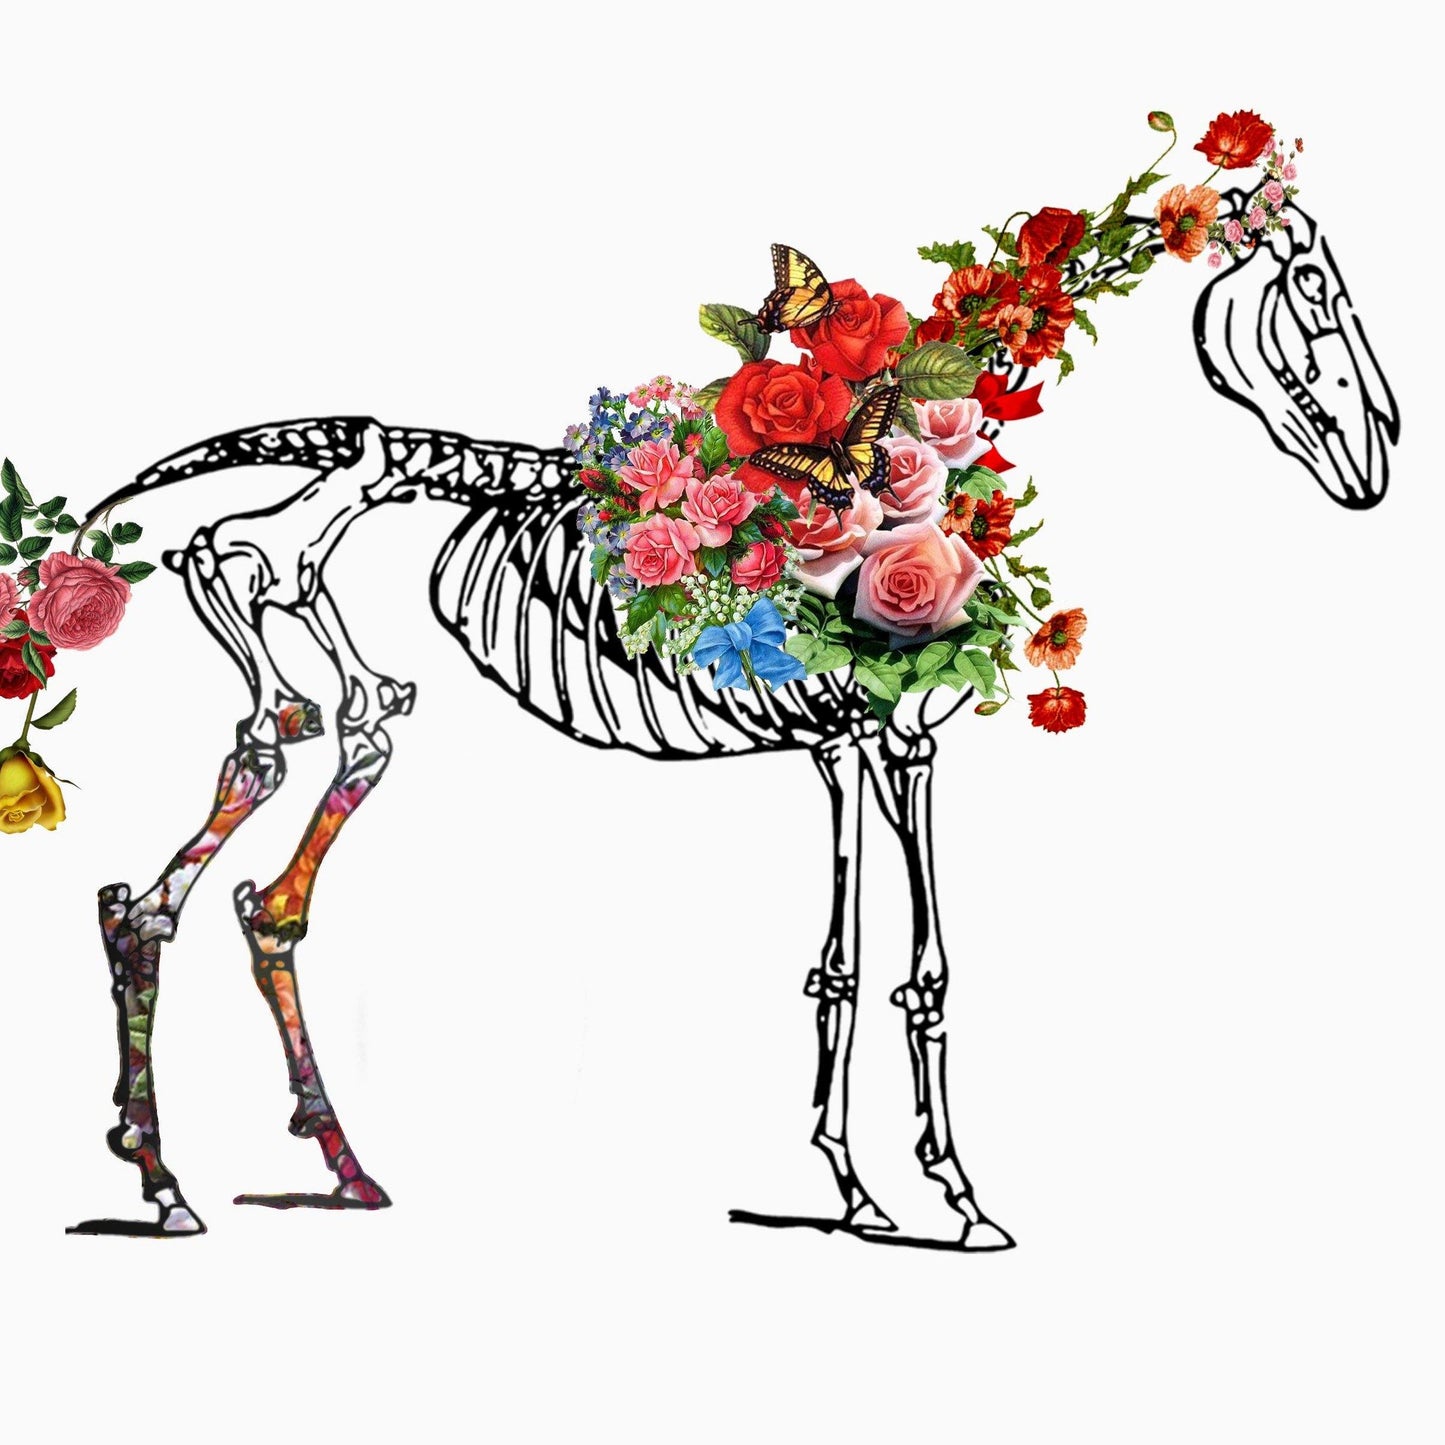 Horse Skeleton Anatomical Flowers | Anatomical Body Print | Flower Art Print | Illustration Poster - 98types